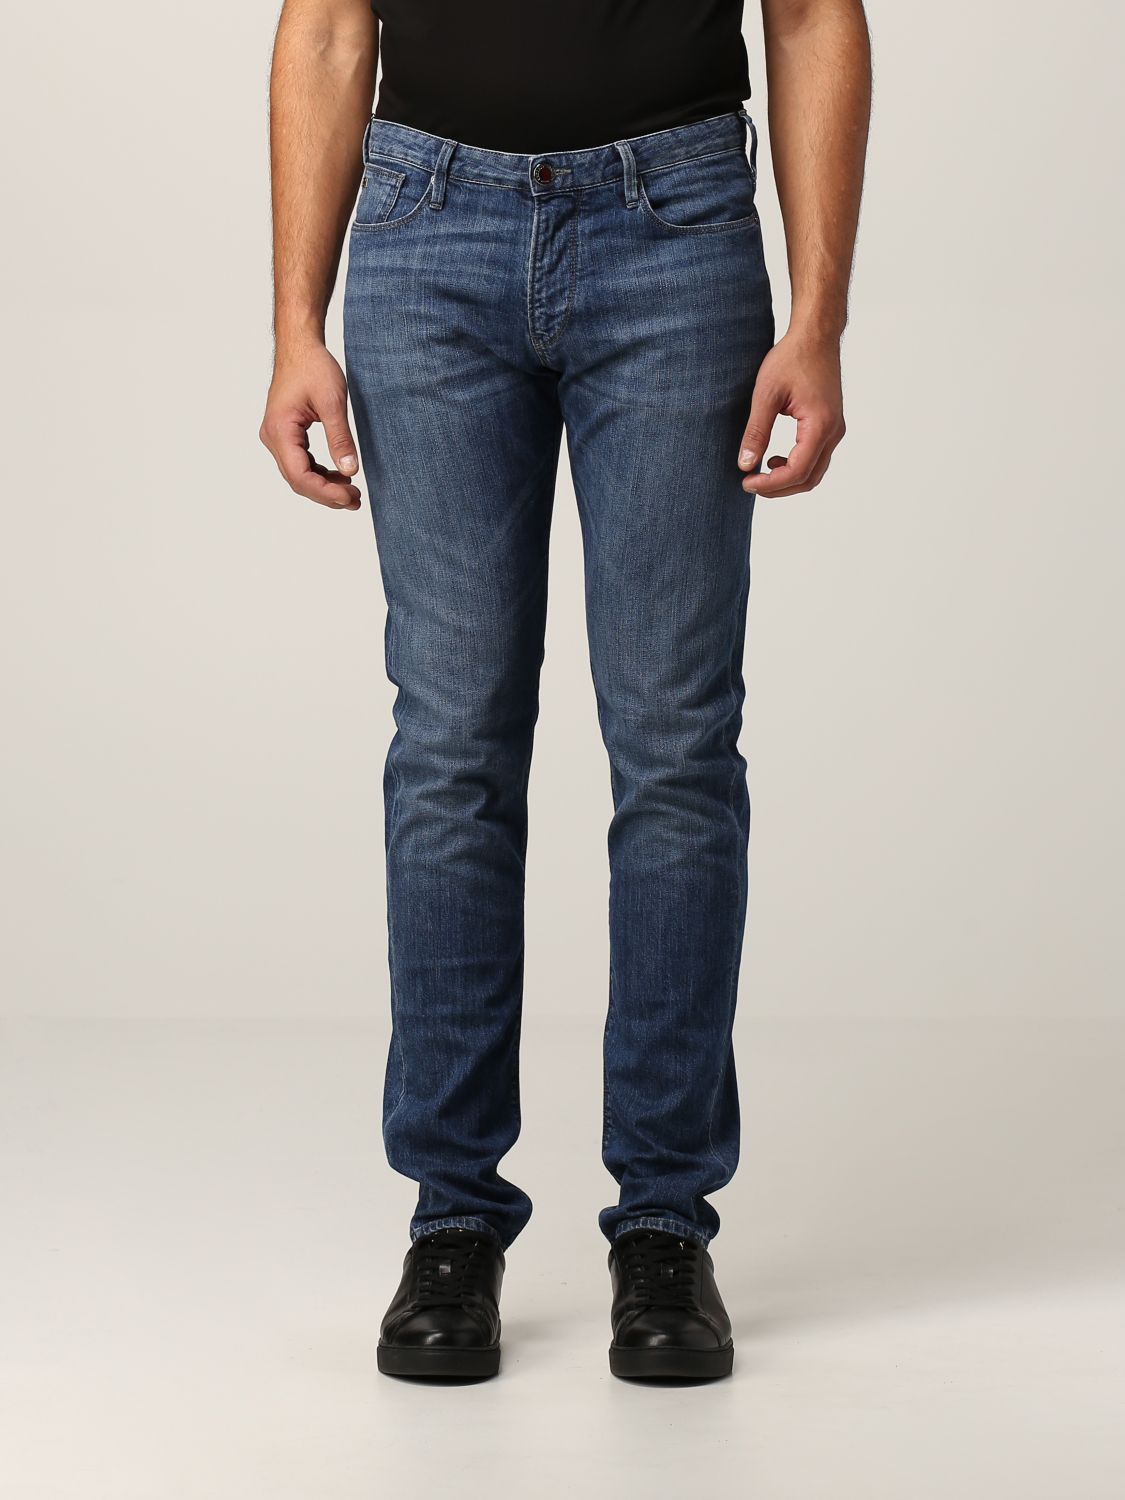 EMPORIO ARMANI: 5-pocket jeans - Denim | Emporio Armani jeans 8N1J06 ...